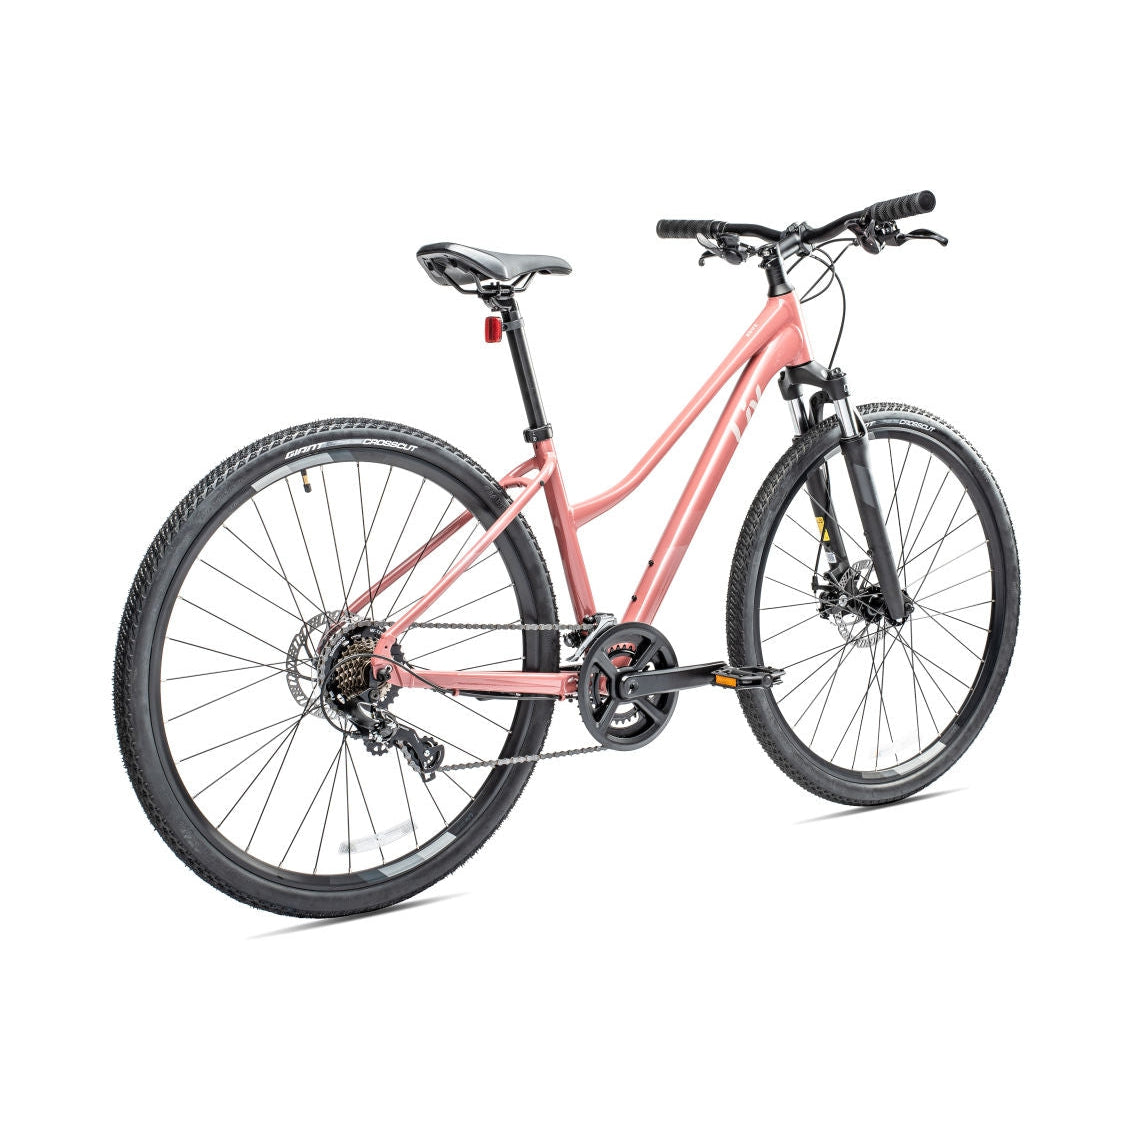 Liv Rove 4 Hybrid Bike - Bikes - Bicycle Warehouse